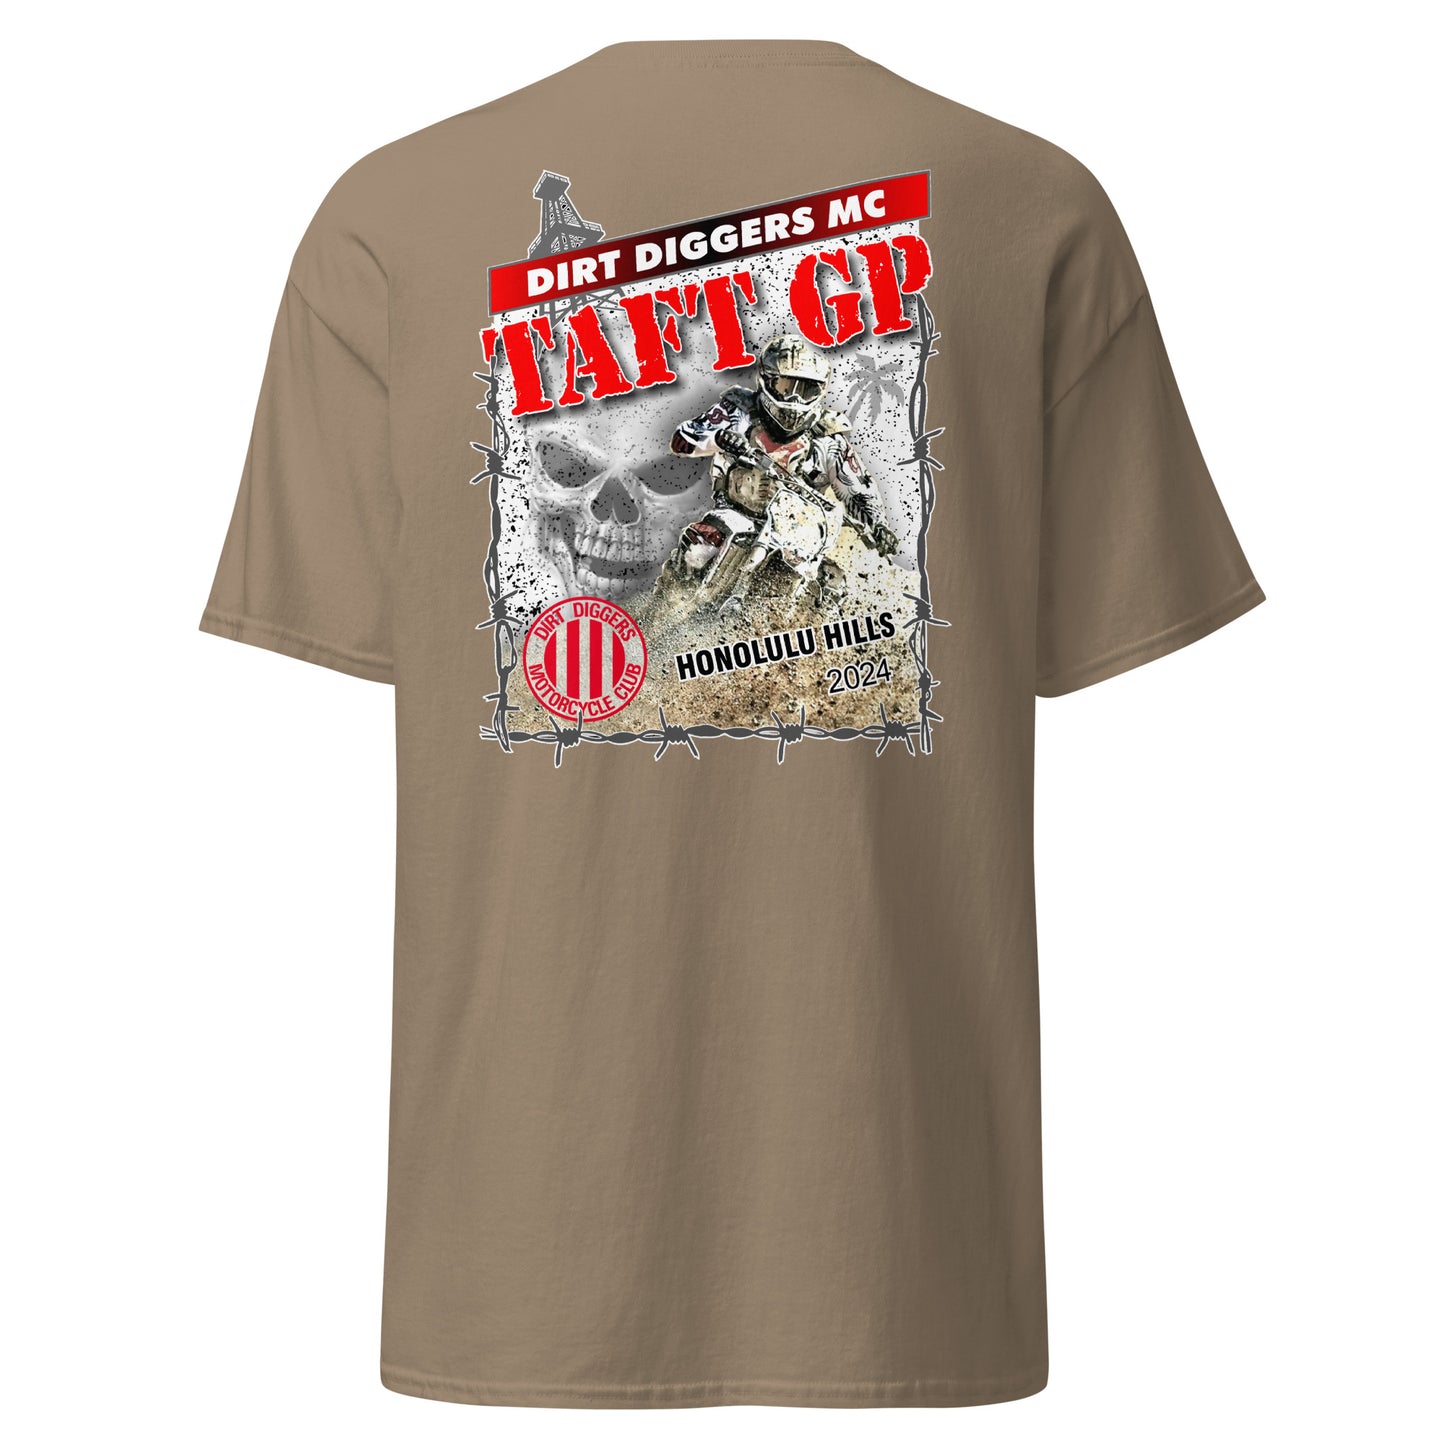 Dirt Diggers 2024 Taft Grand Prix Event Shirt - Adult T-Shirt - District 37 NGPC